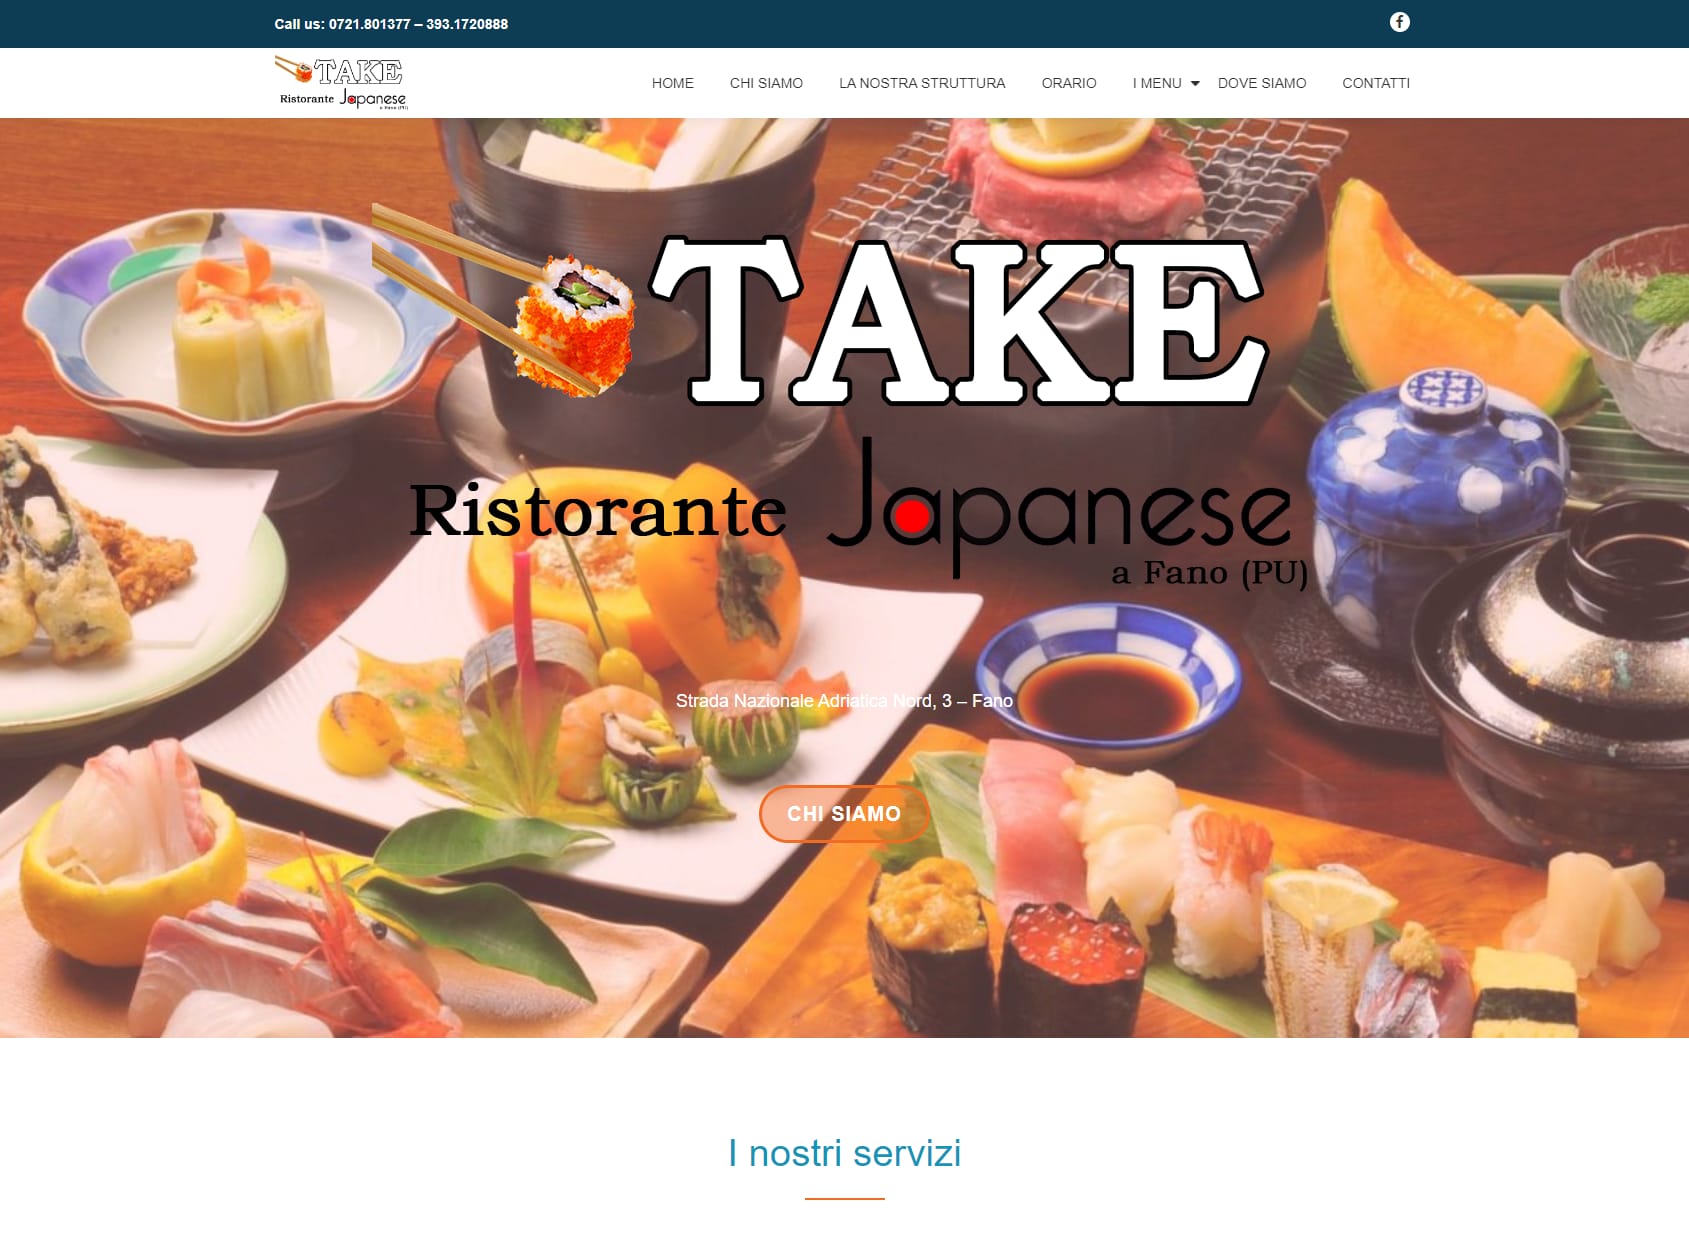 Take ristorante Japanese